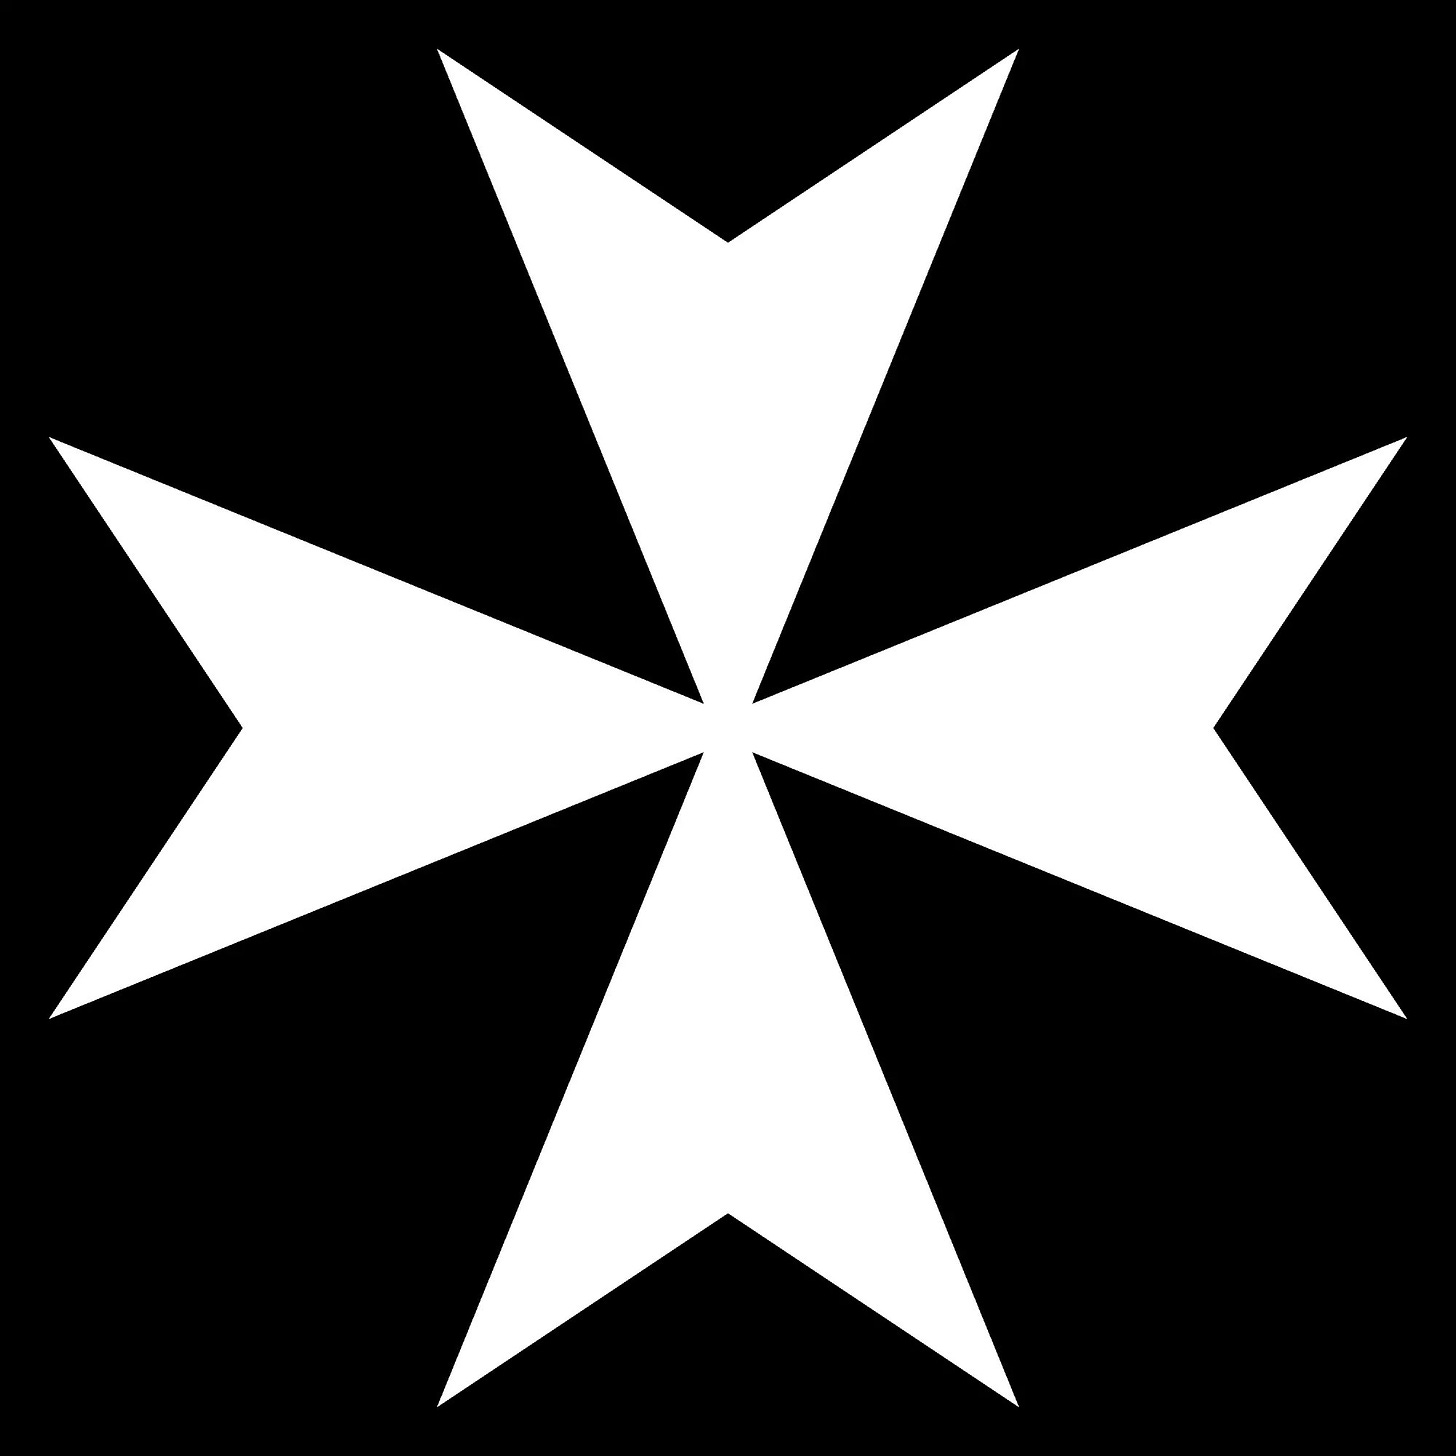 The Maltese Cross: Its origin and importance to Malta